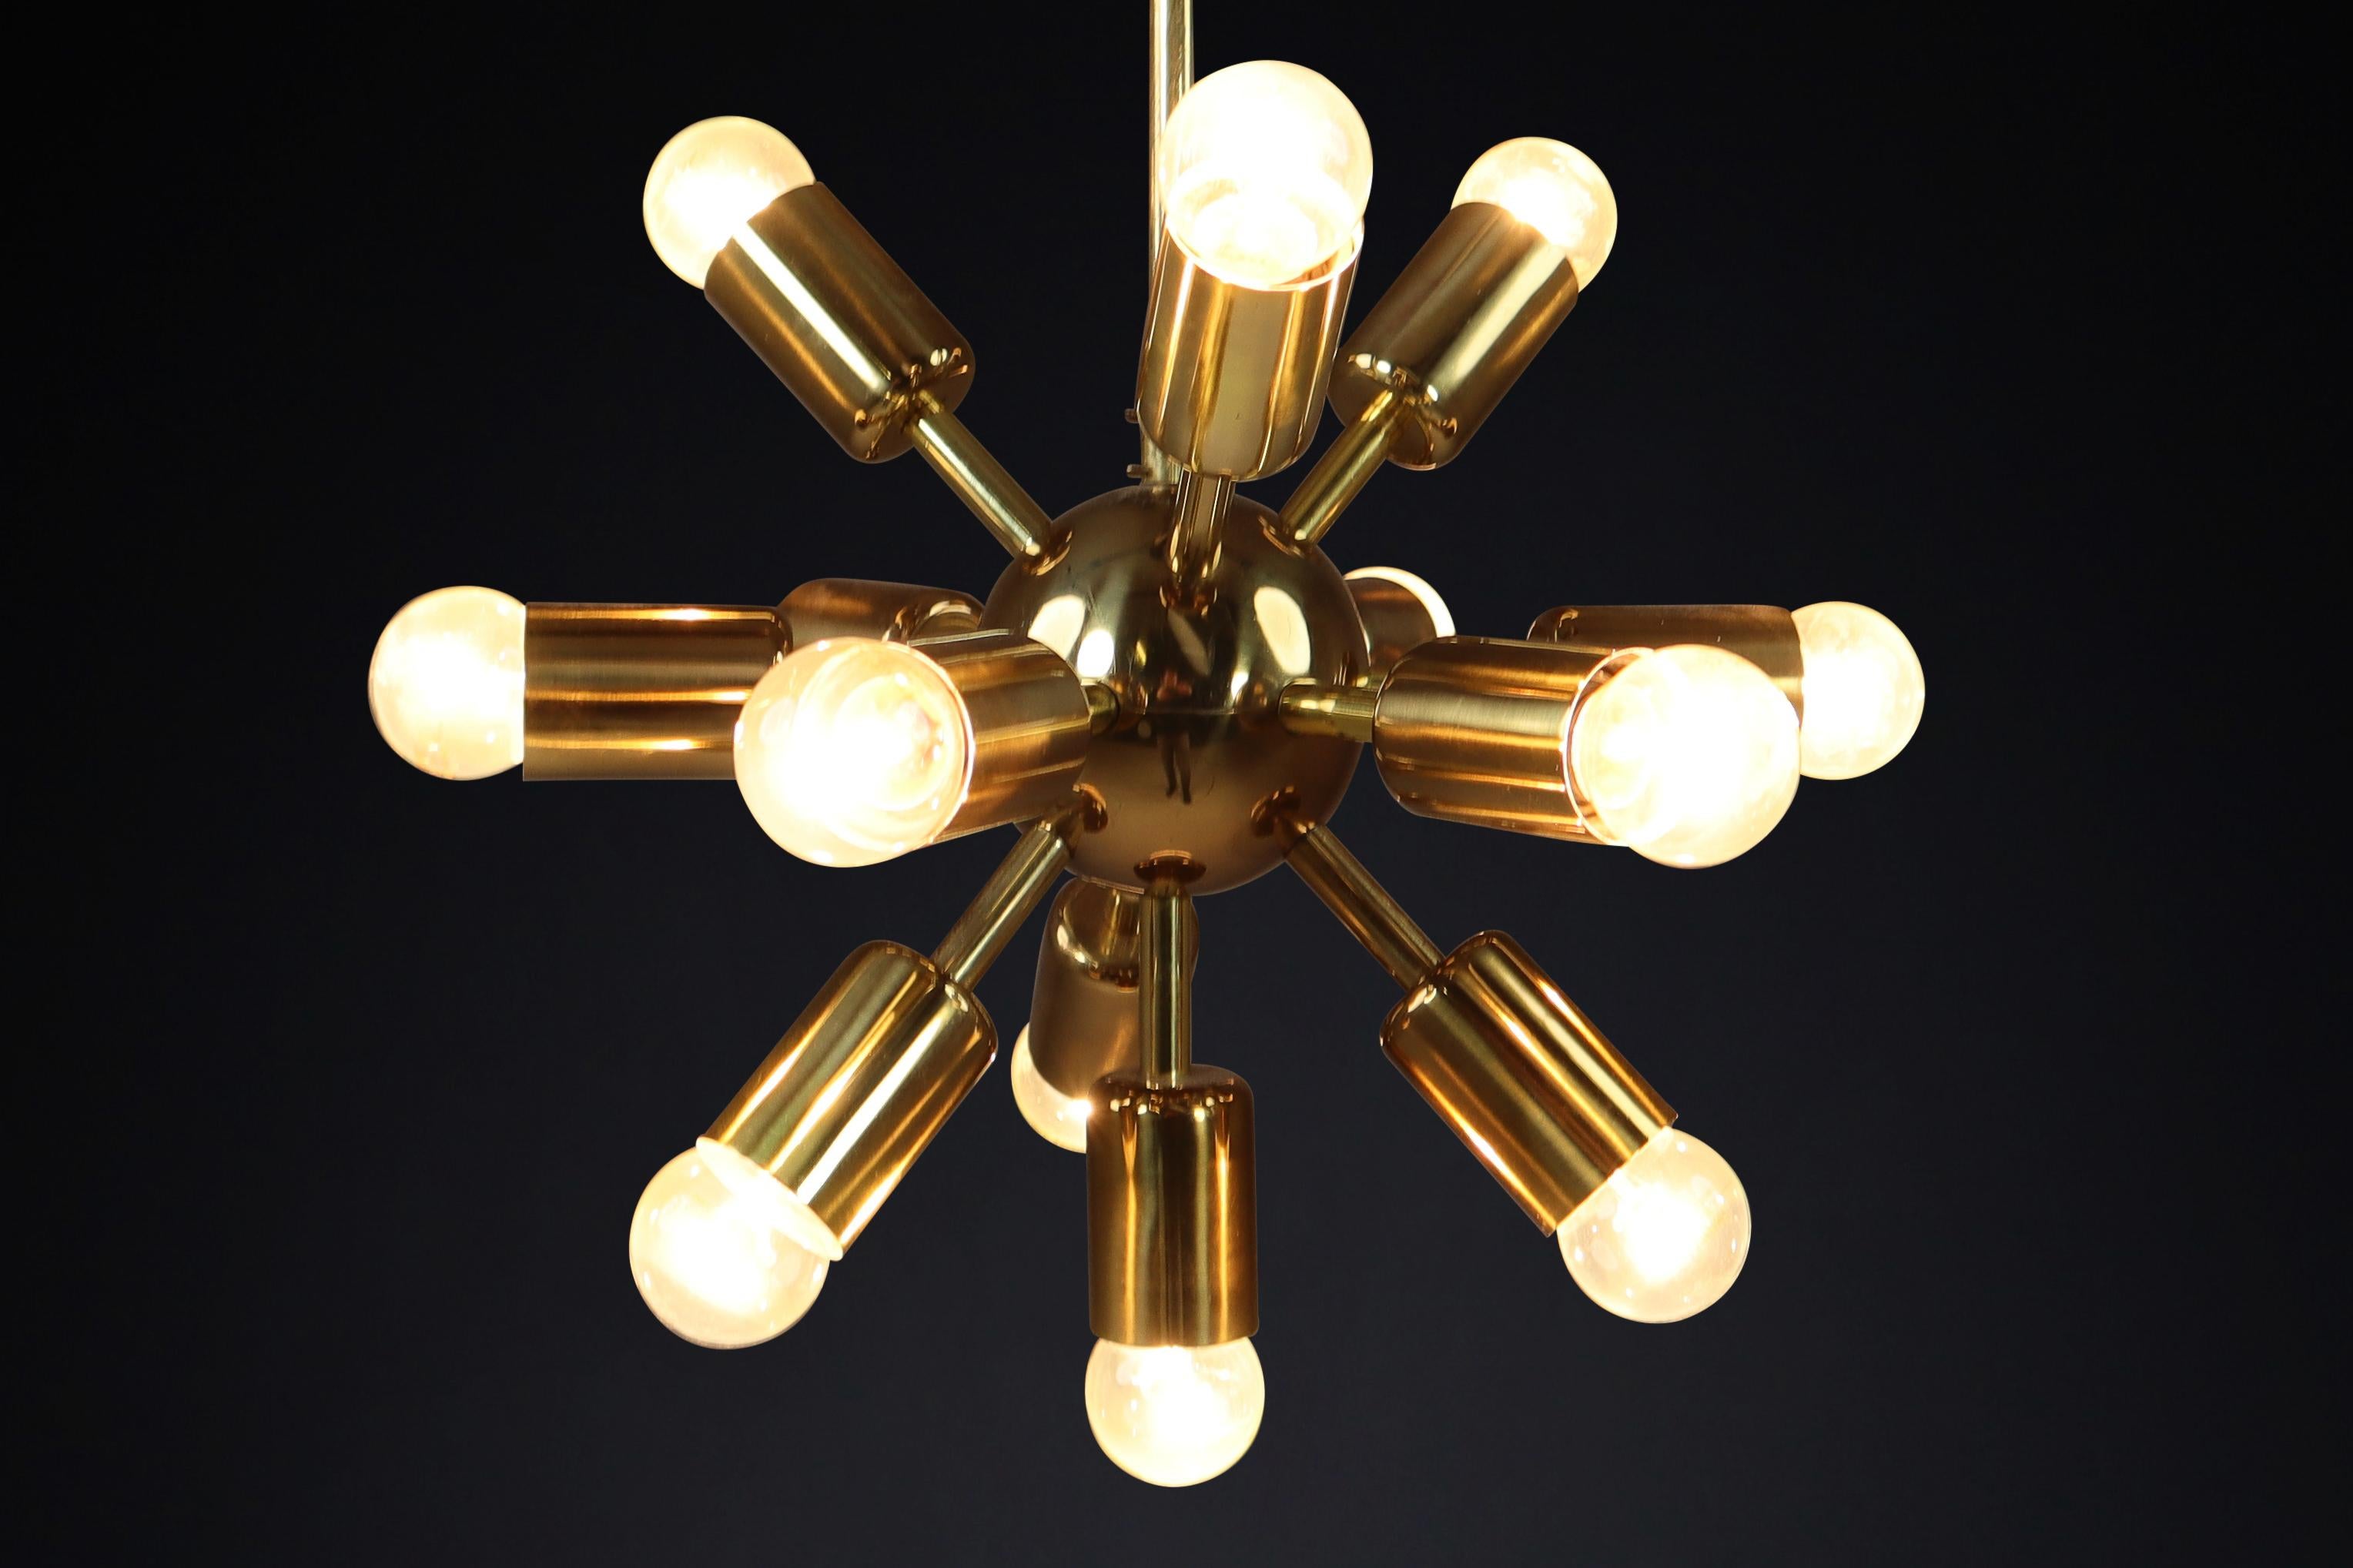 Midcentury Brass Sputnik Chandeliers with Twelve Lights by Drupol, Praque 1960s For Sale 2